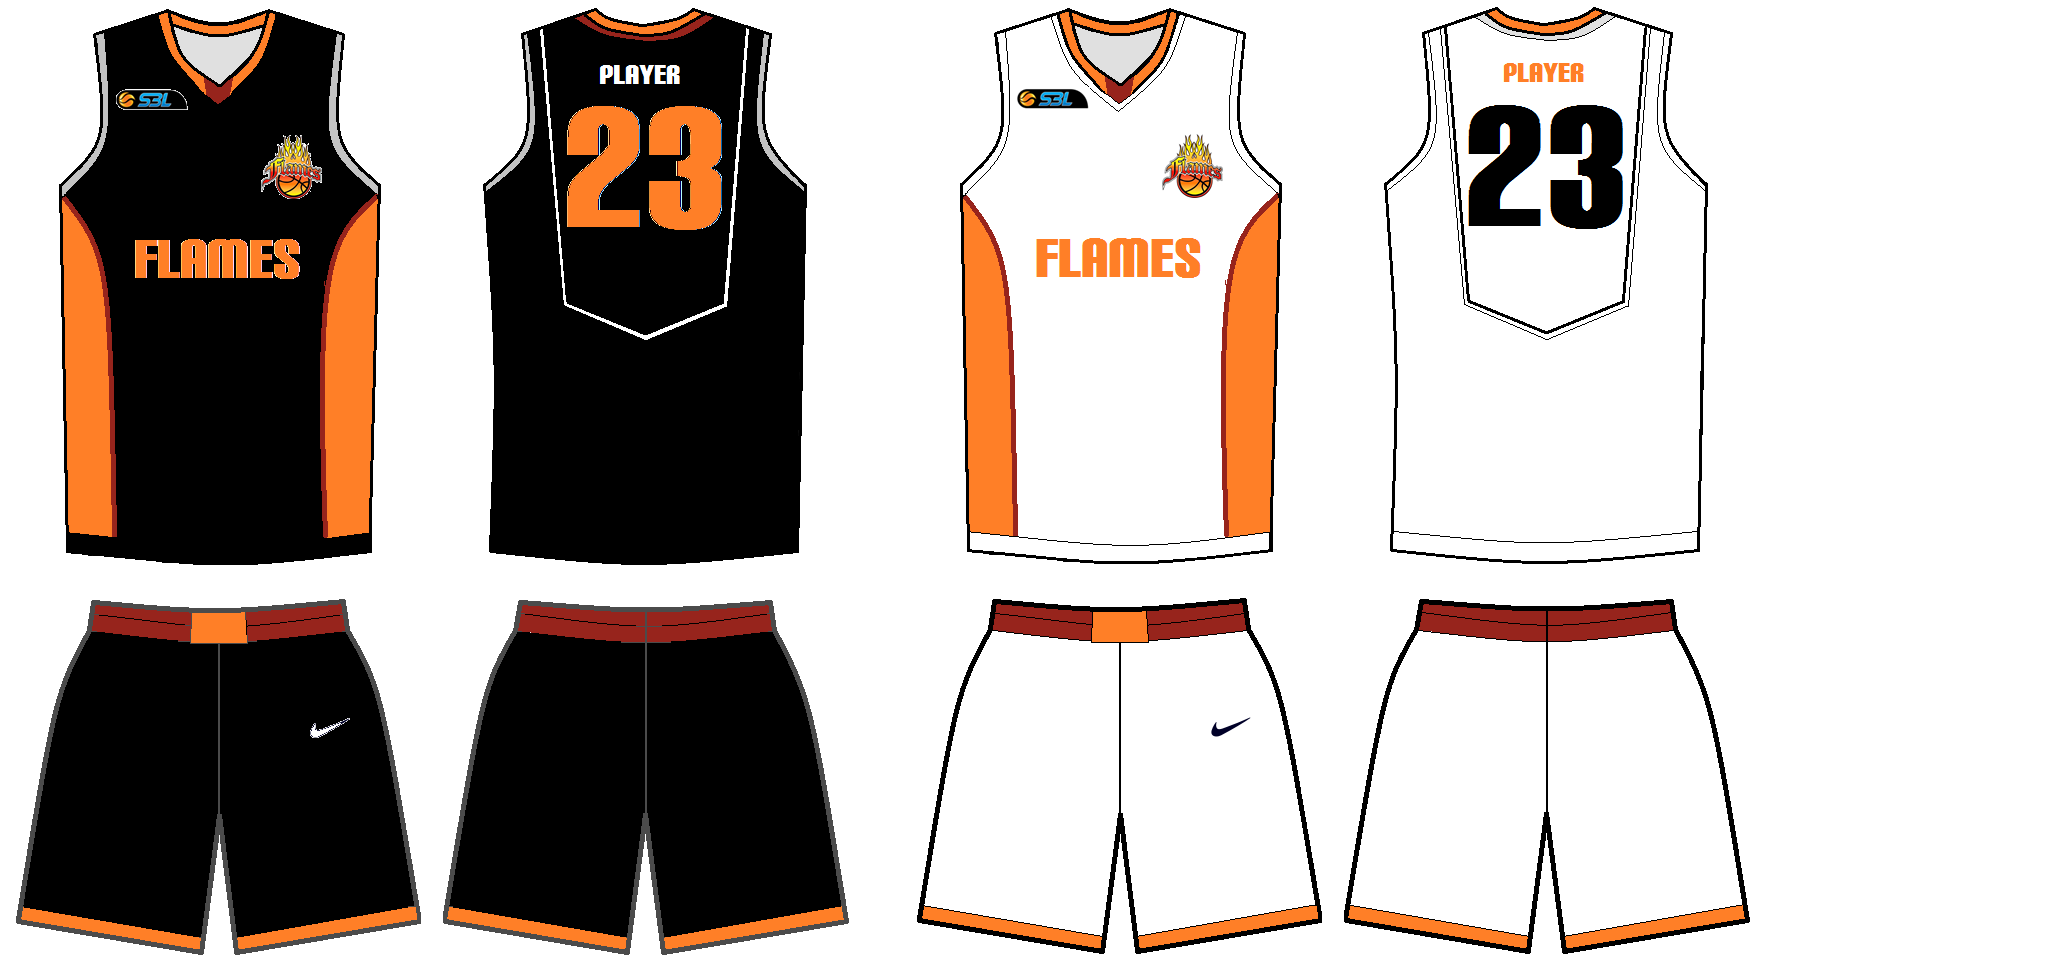 Download 13 Basketball Uniform PSD Templates Images - Basketball ...